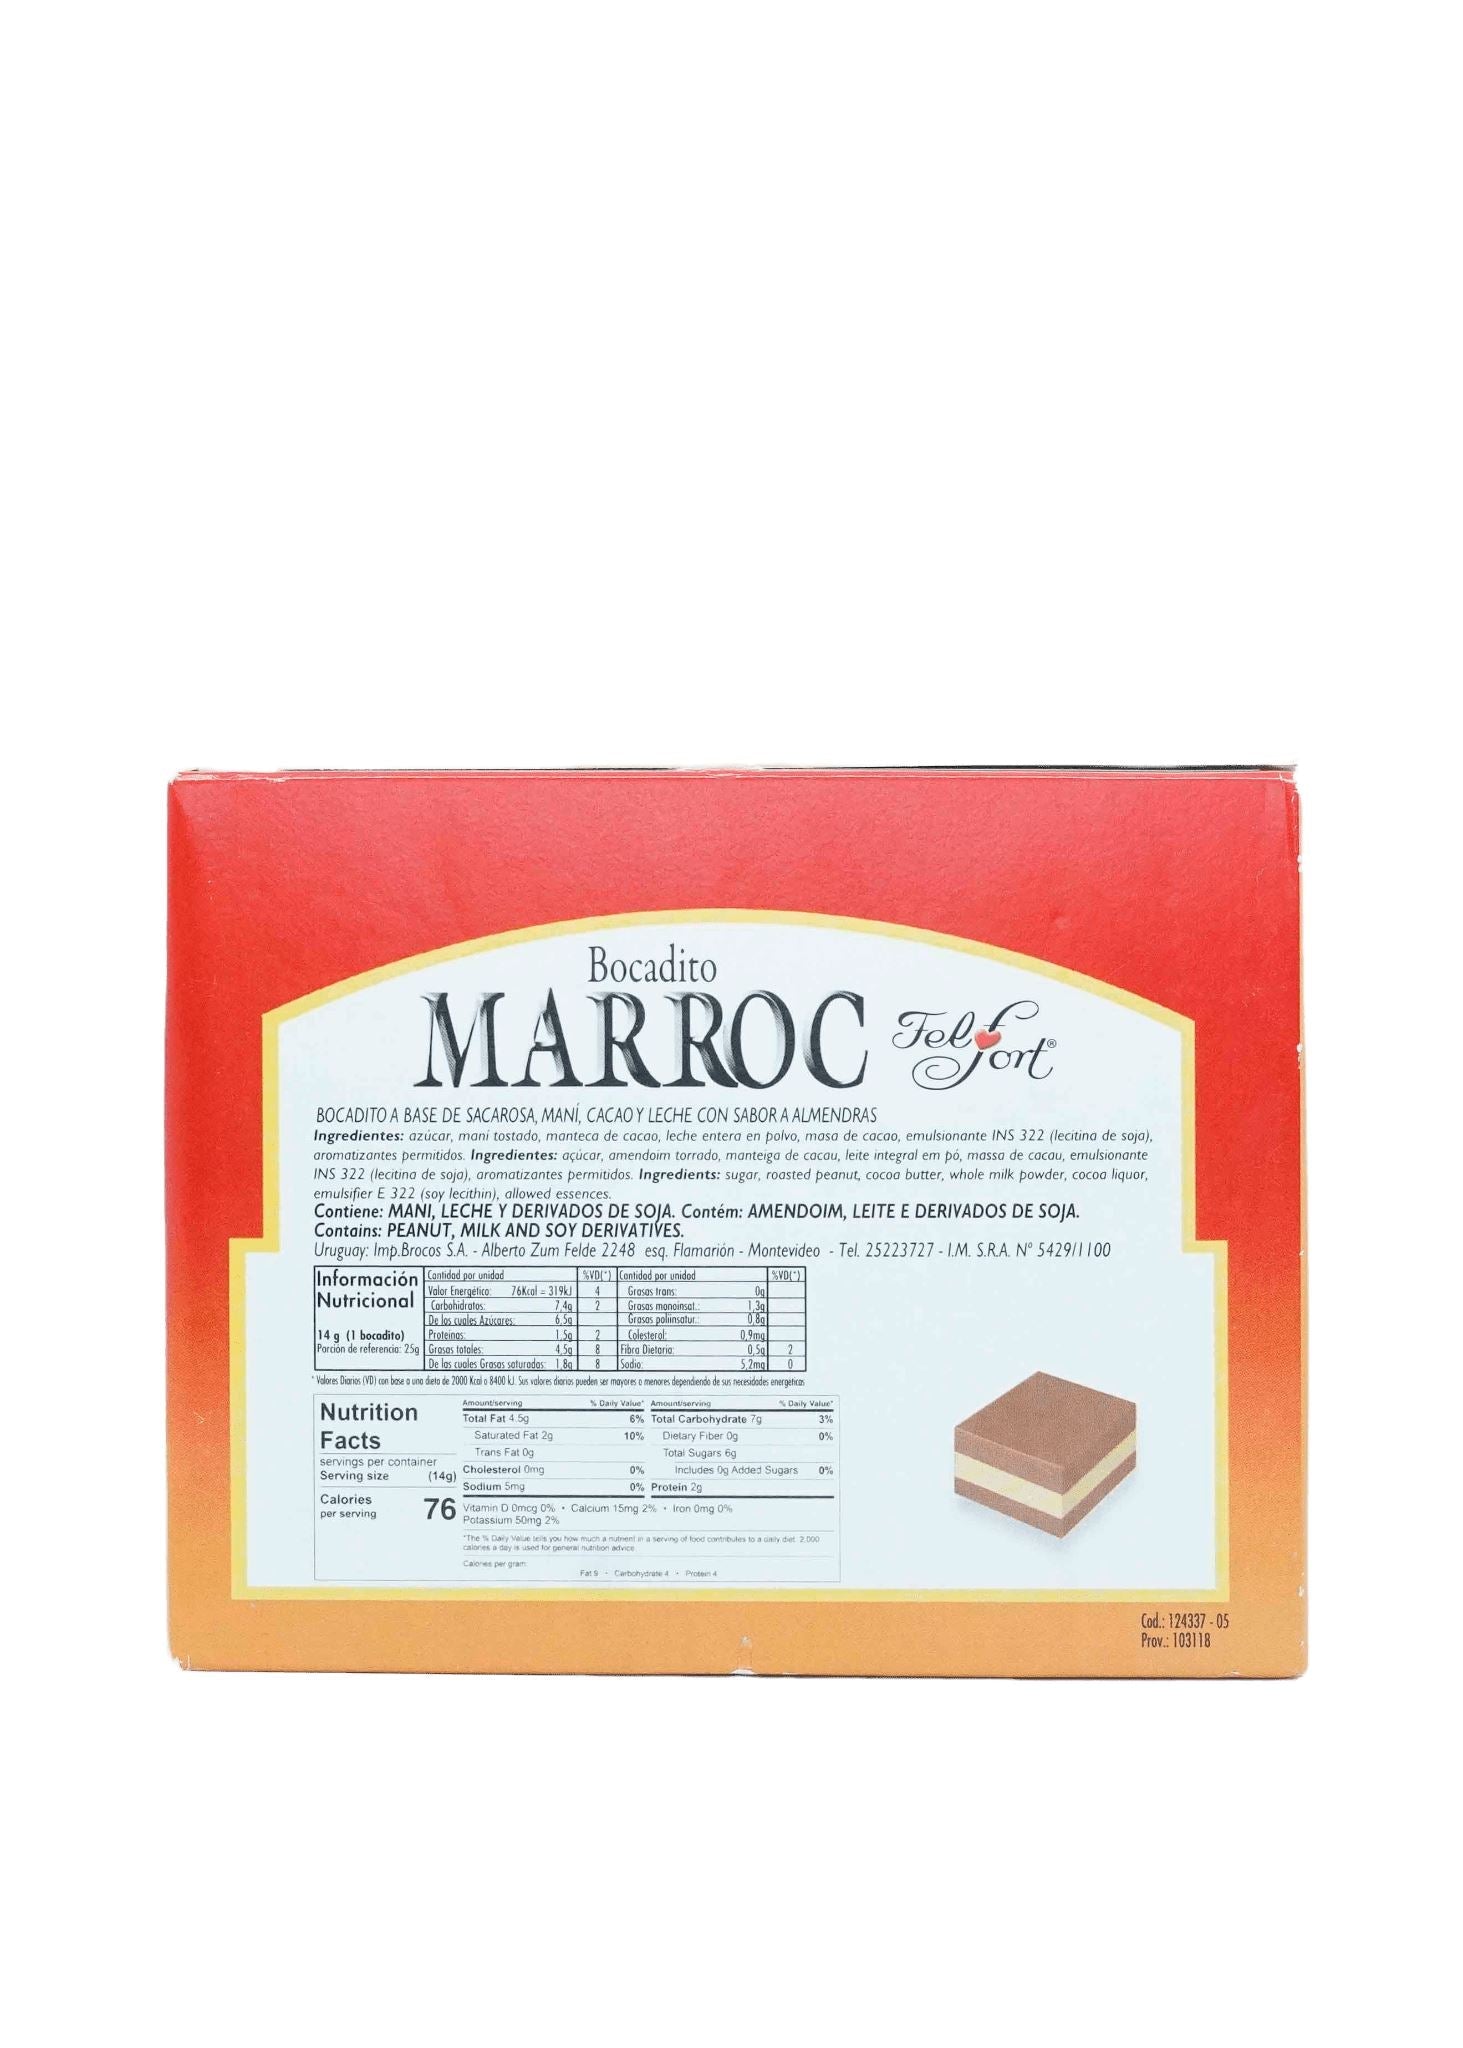 Marroc - Praline Bonbon 14g Miscellaneous Felfort 